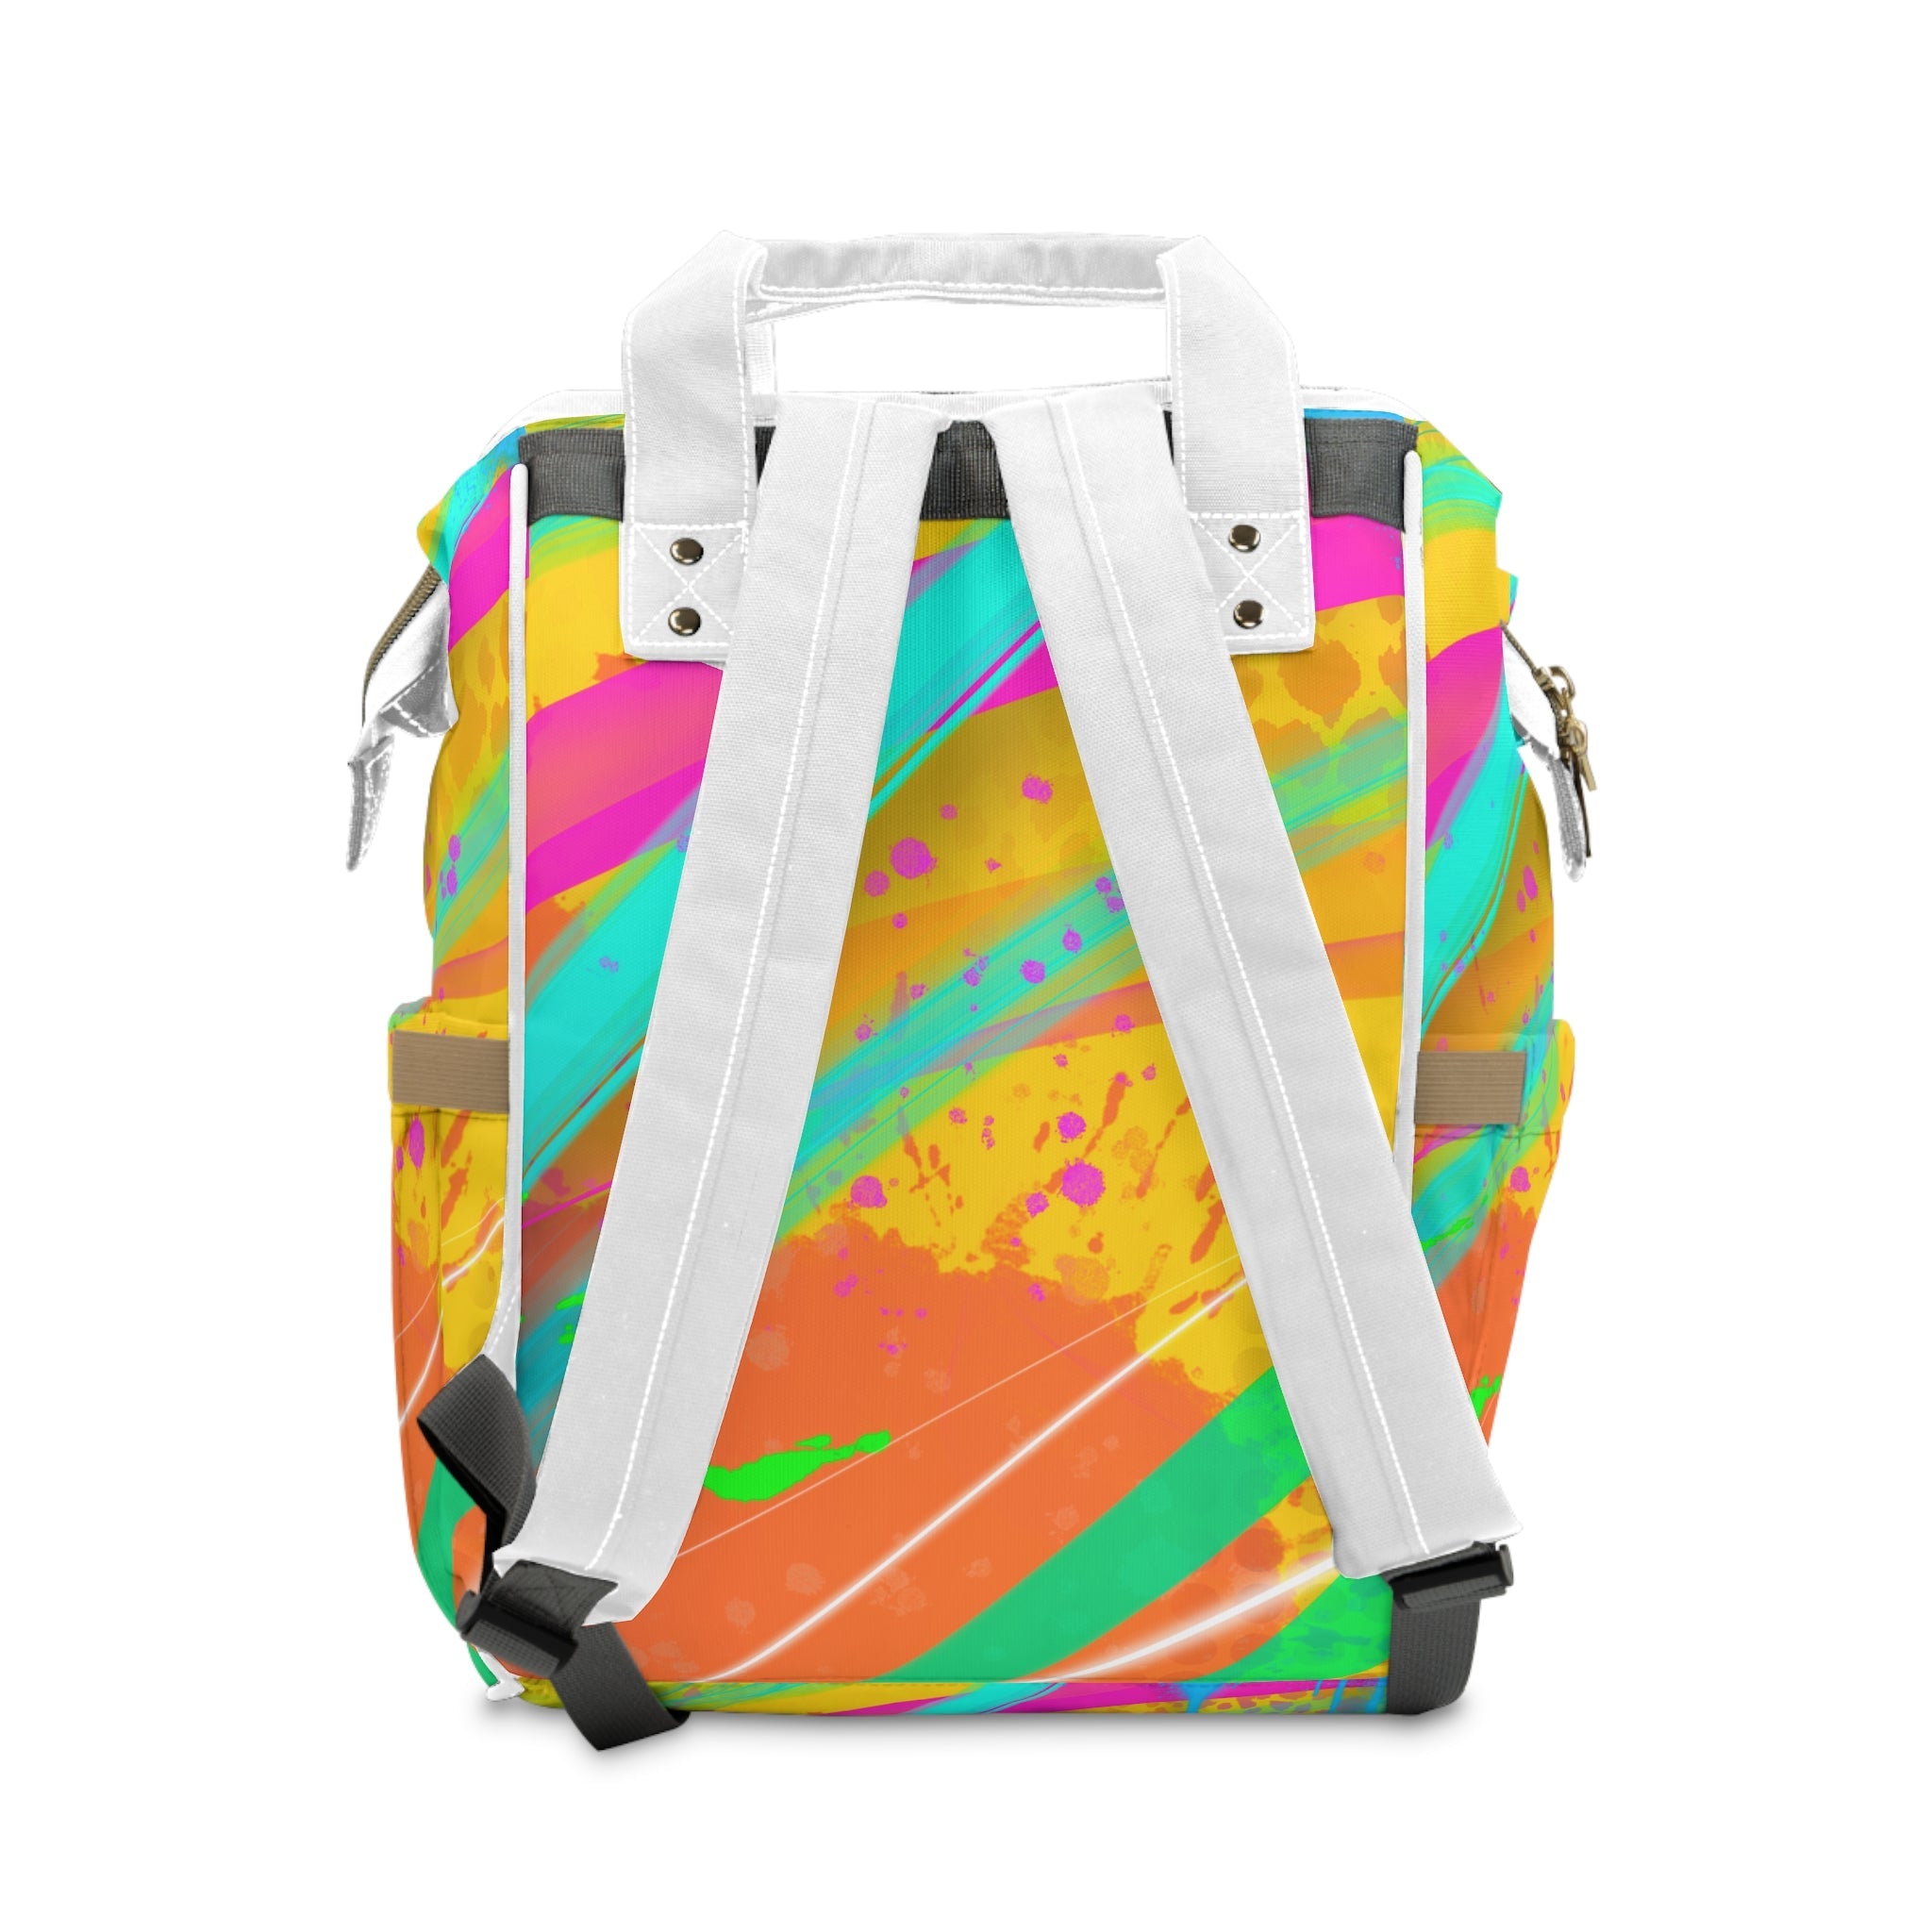 Multifunctional Diaper Backpack - Sean Keith Art